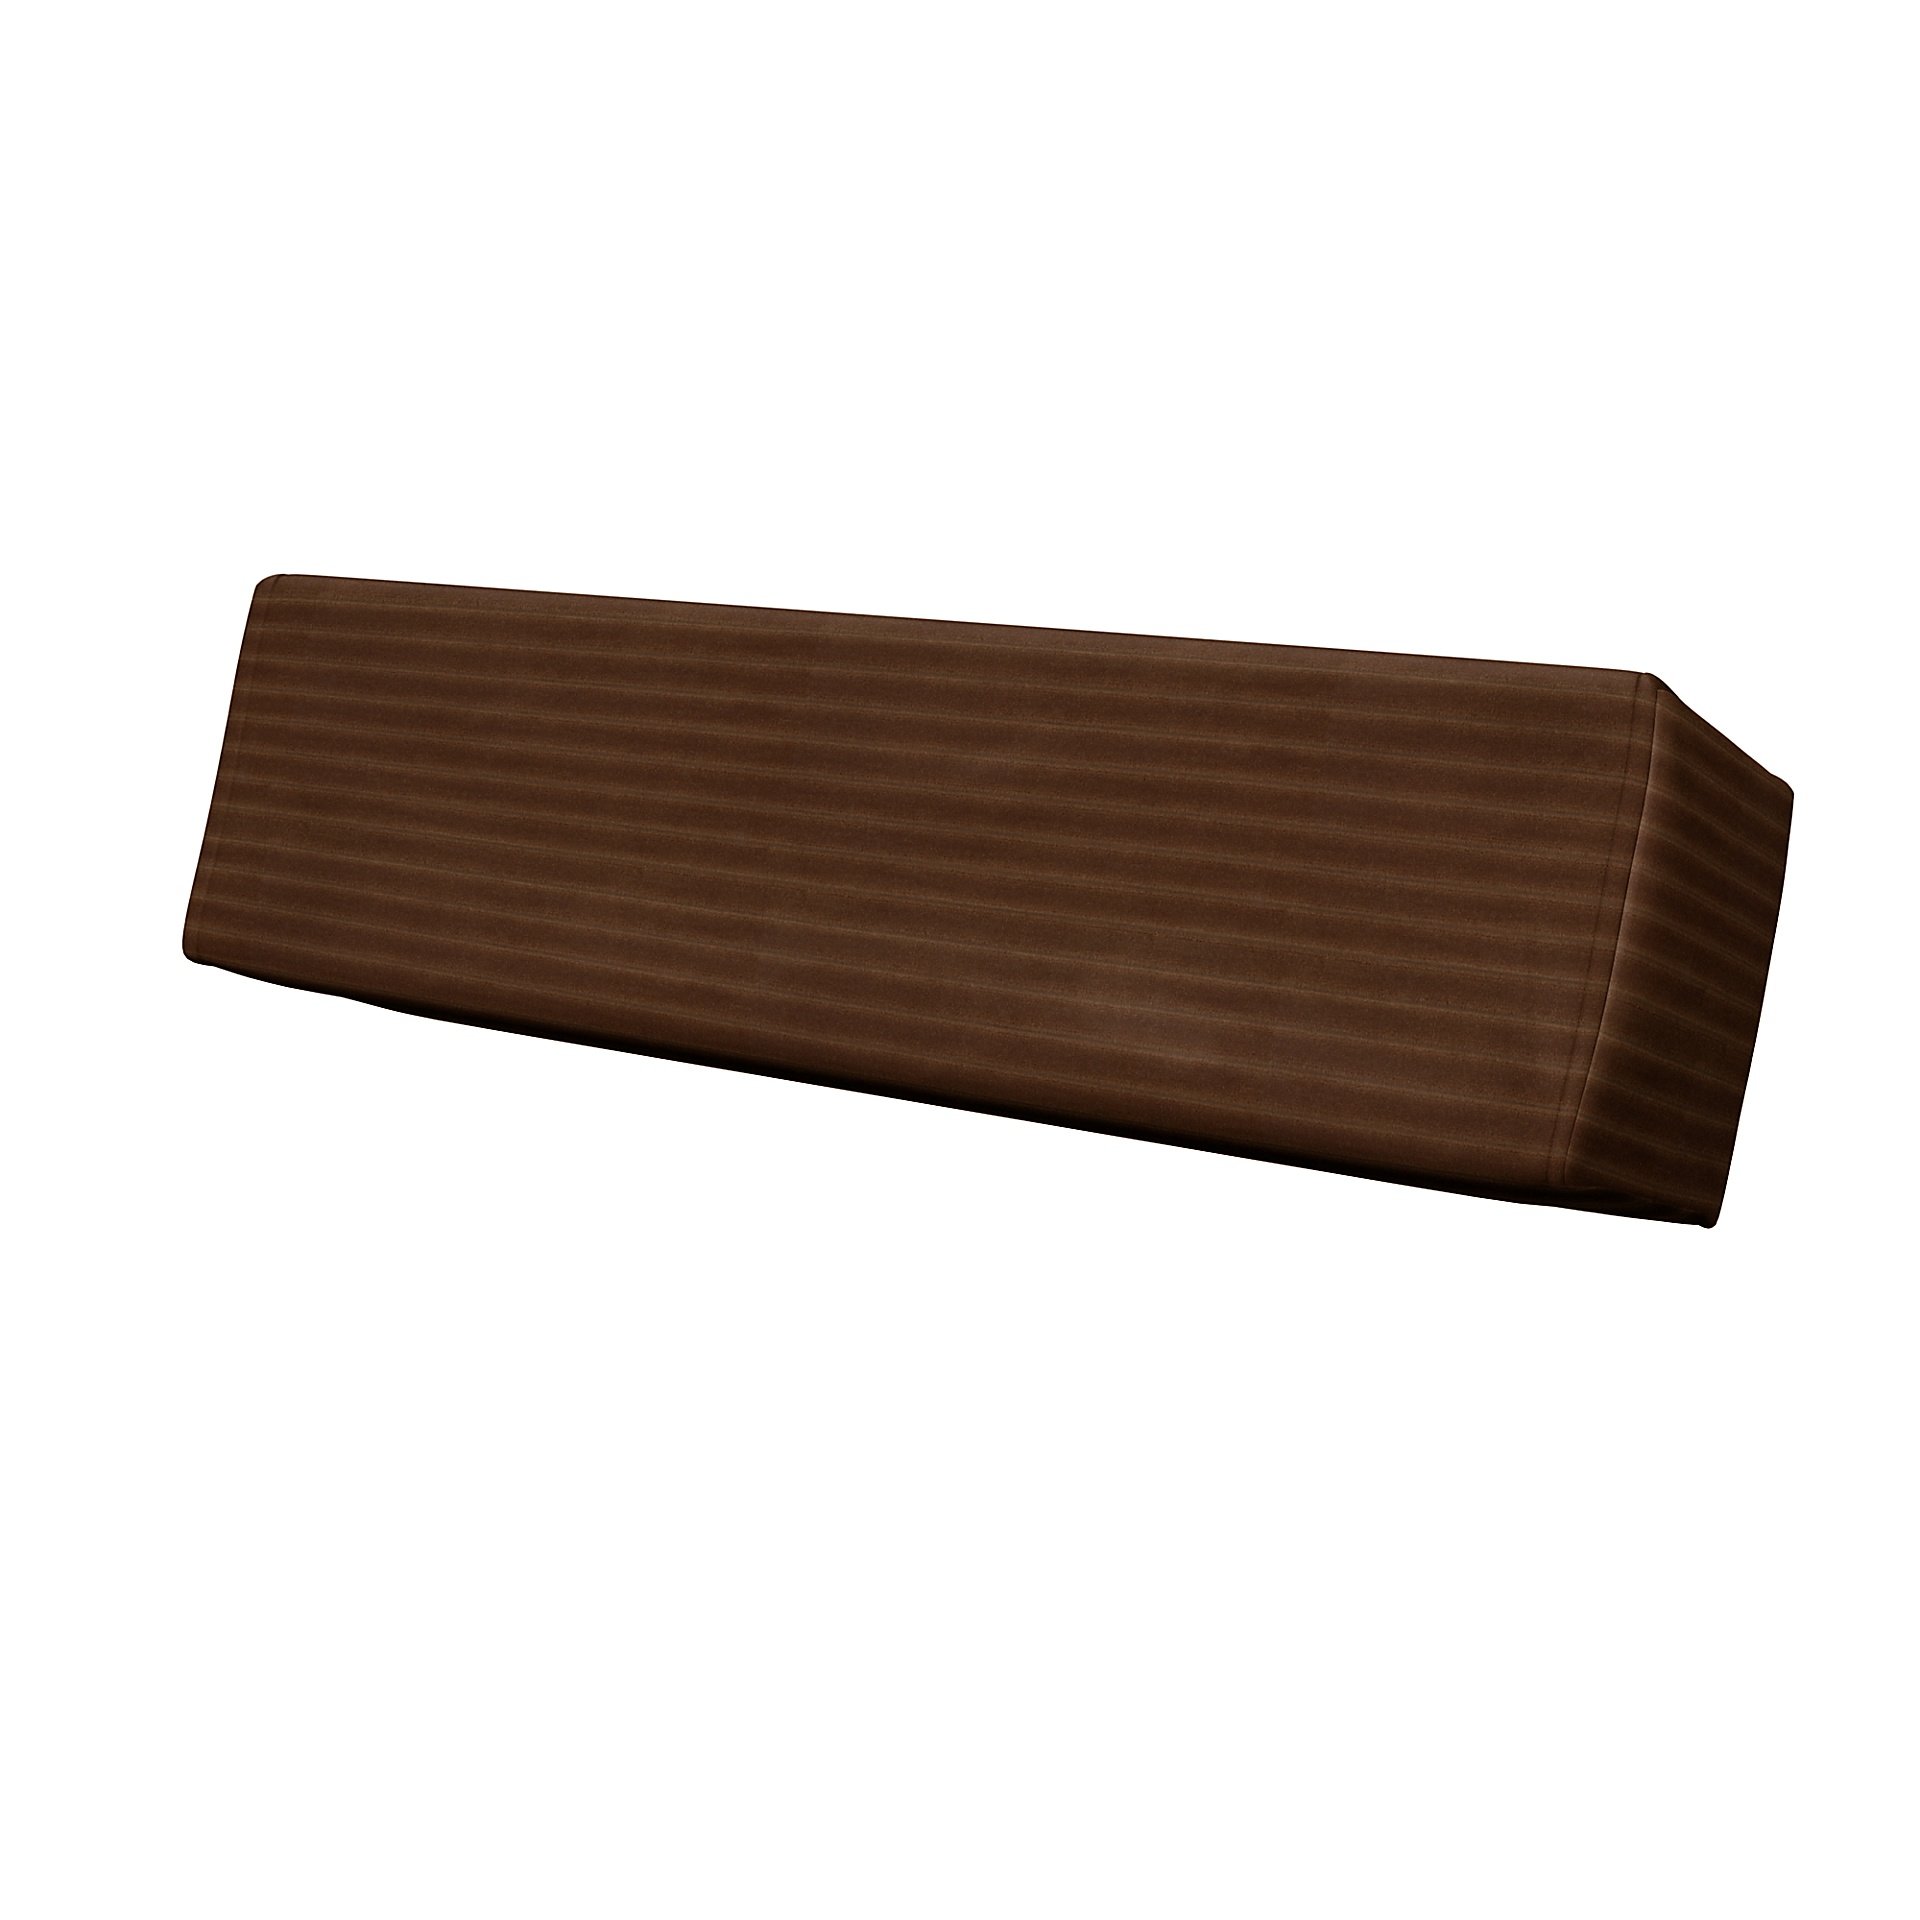 IKEA - Cushion Cover Beddinge Square , Chocolate Brown, Corduroy - Bemz